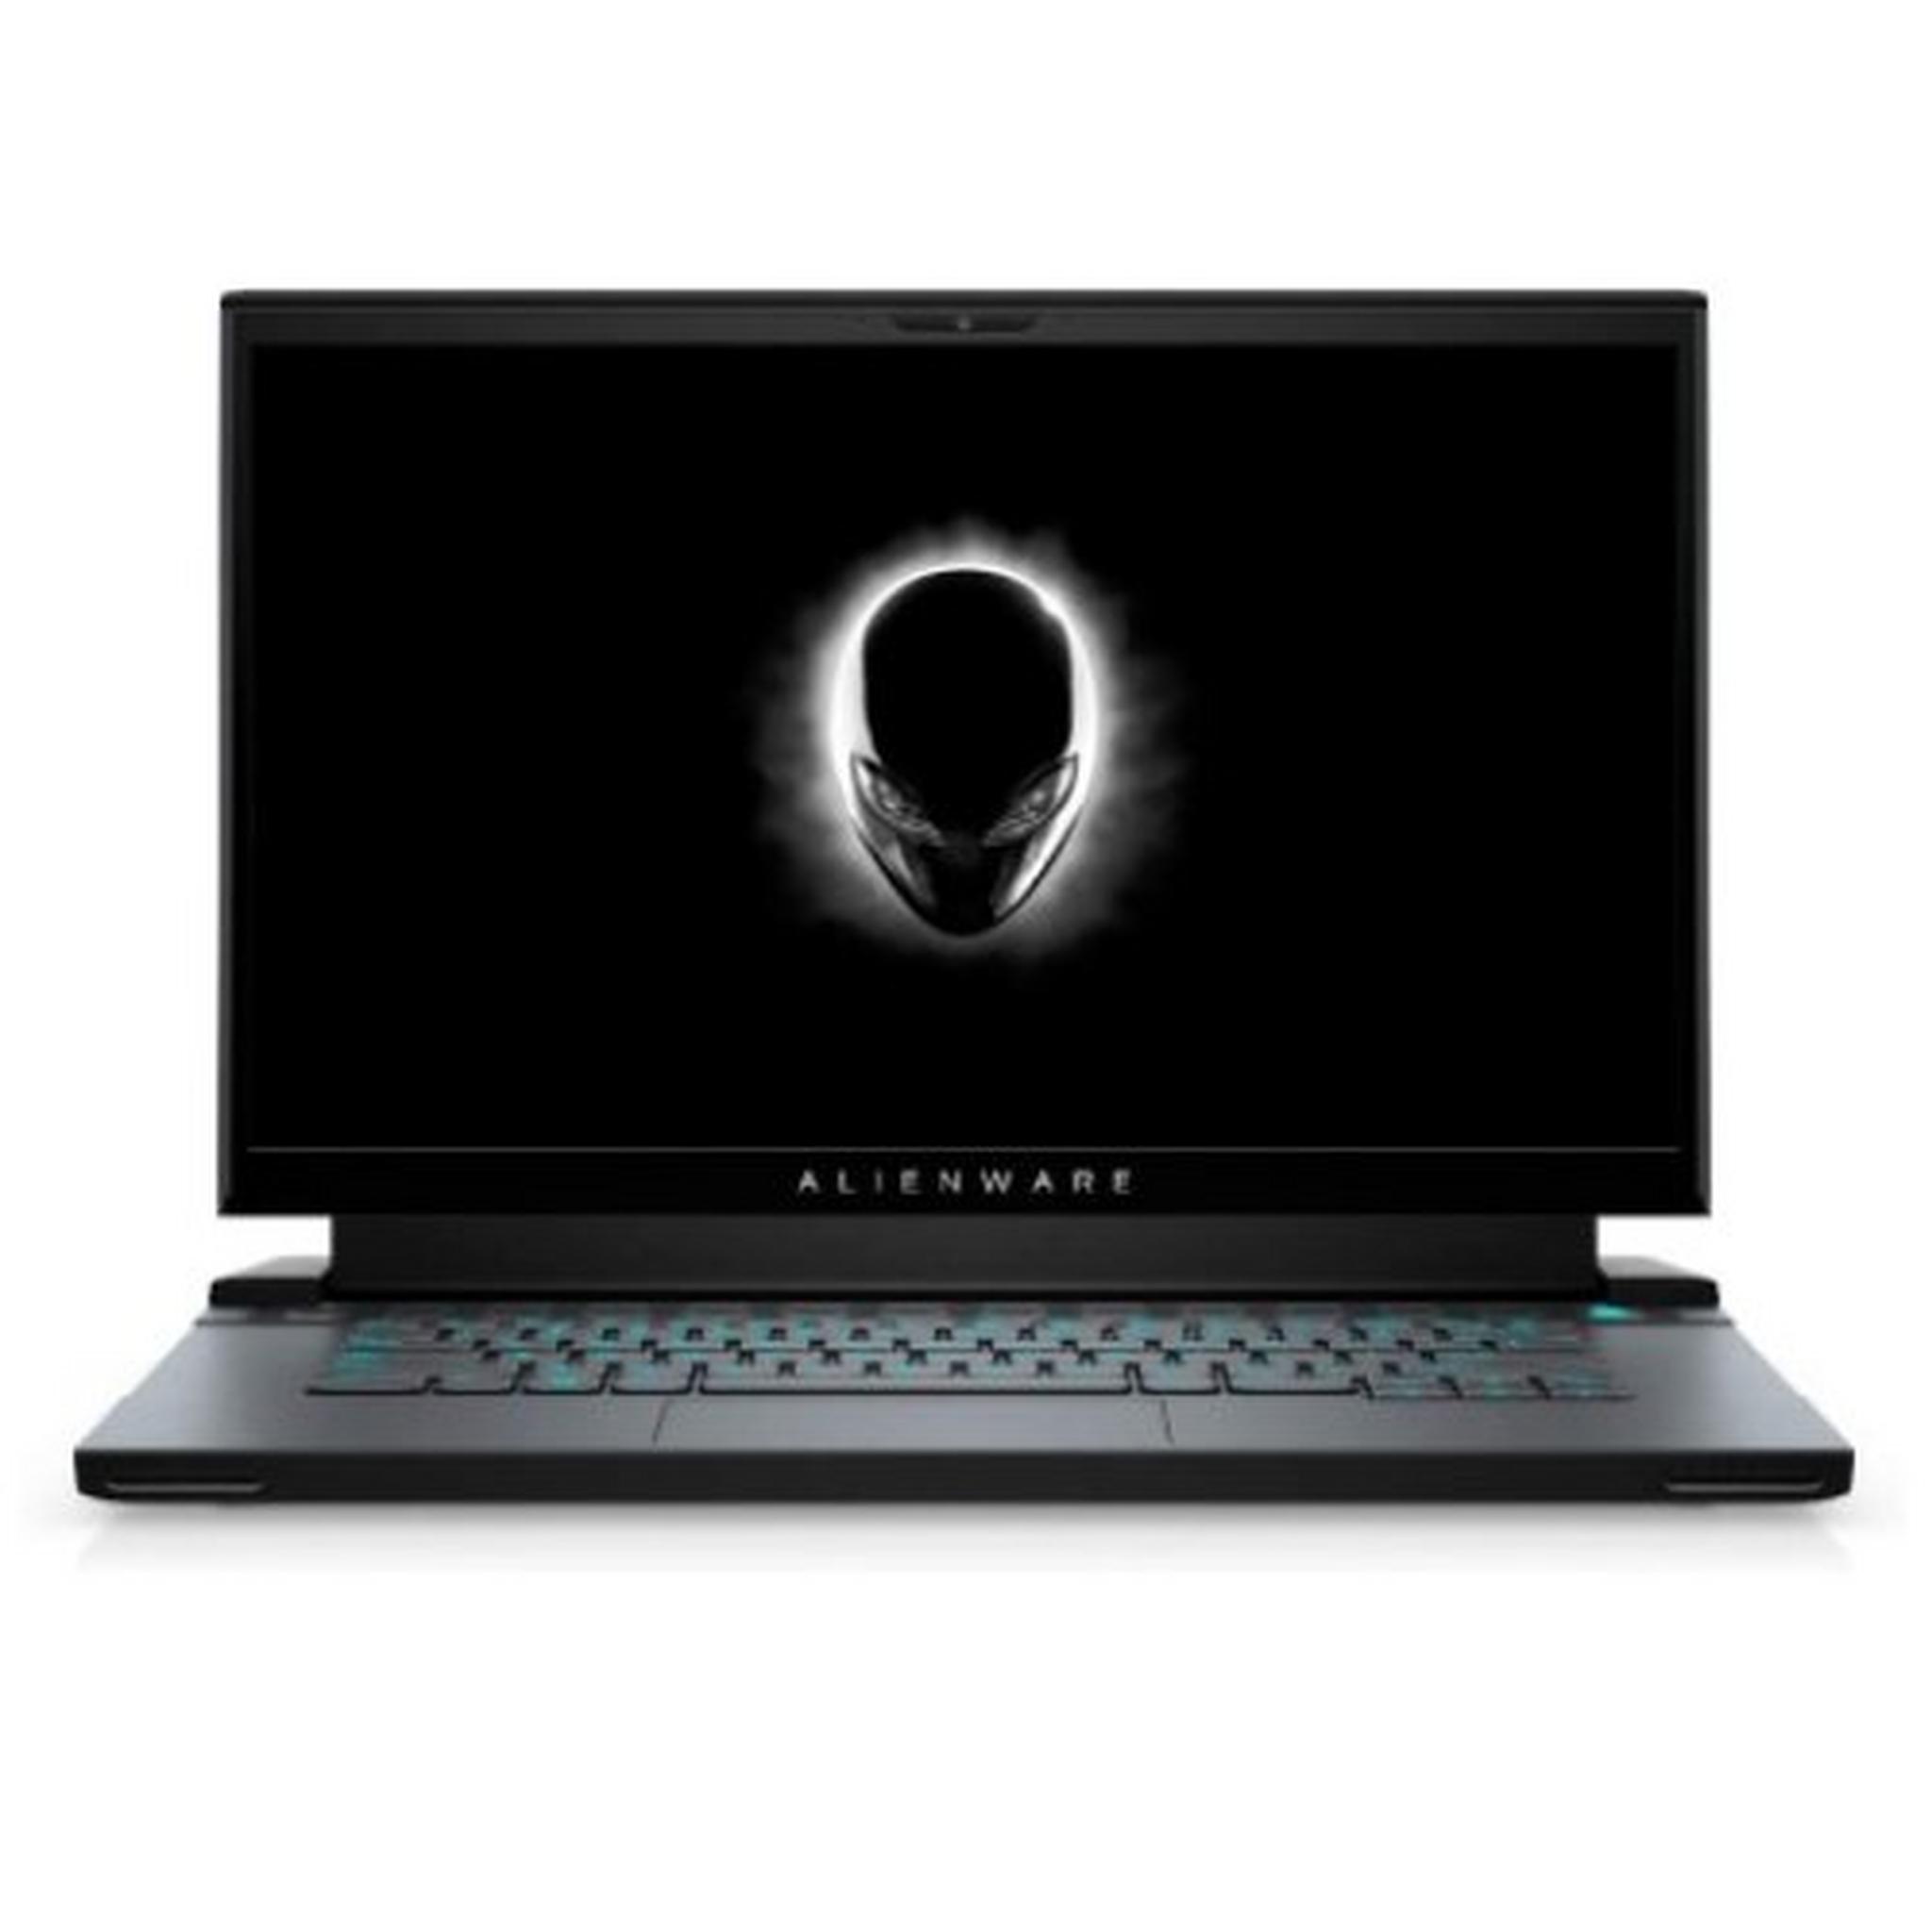 Dell Alienware M15 R4, Core i9, Nvidia Geforce RTX3080 8GB, RAM 32GB, SSD 1TB, 15.6" FHD 300Hz Gaming Laptop - Black